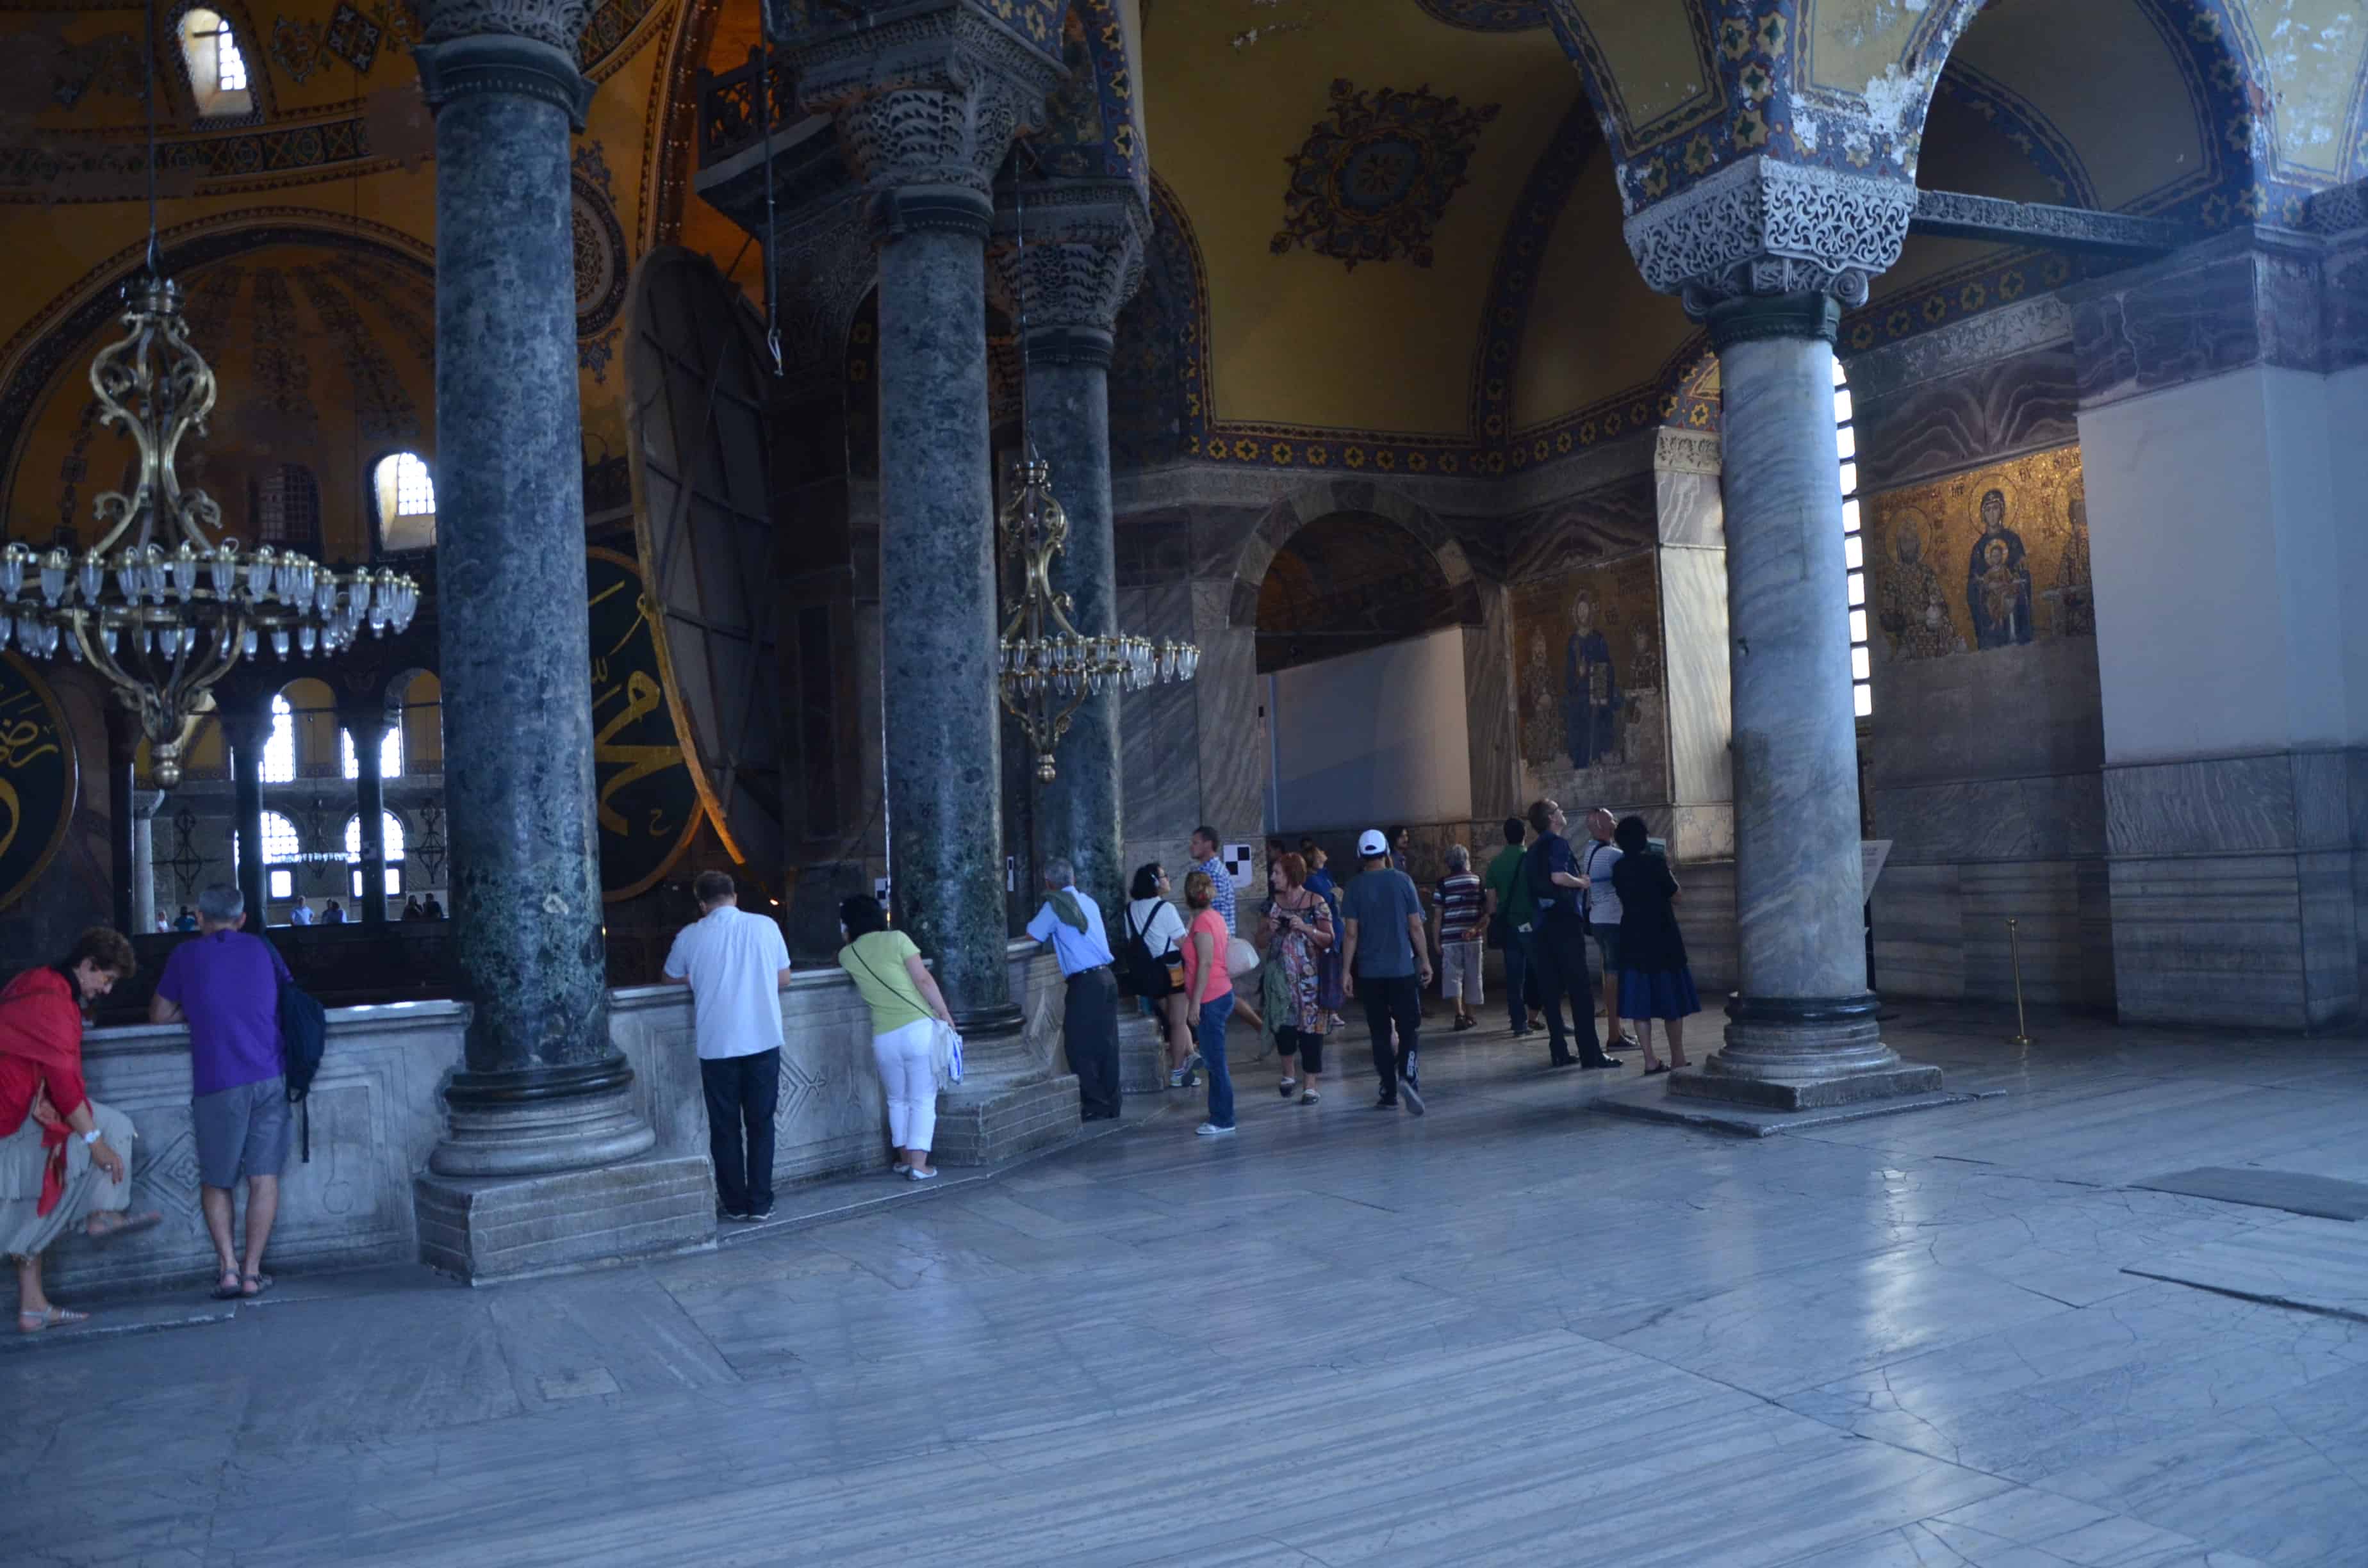 Upper gallery at Hagia Sophia in Istanbul, Turkey